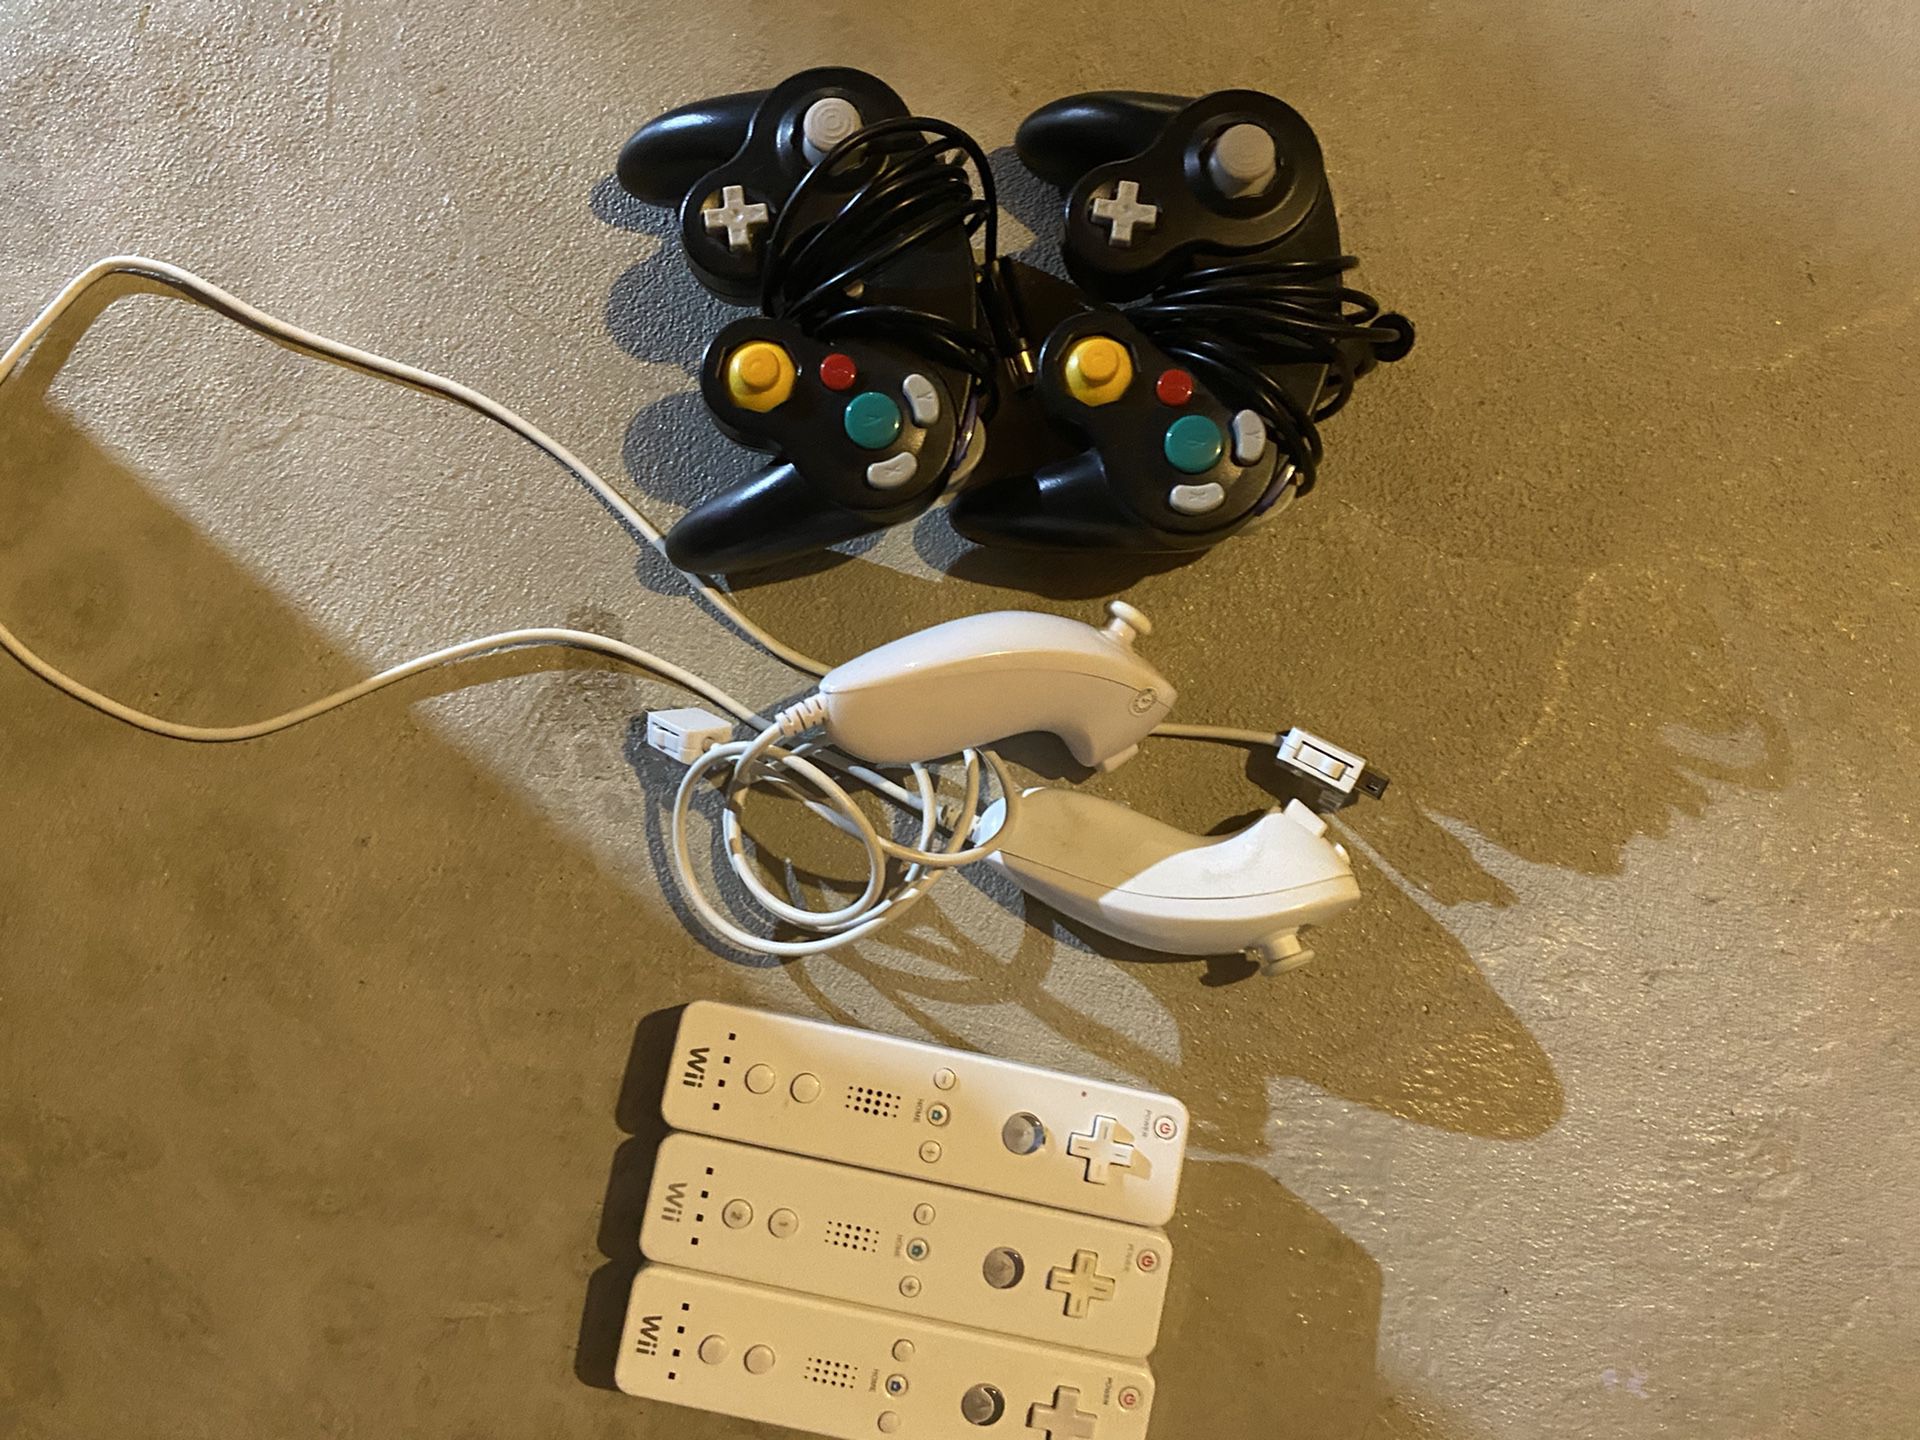 Nintendo Remote Controllers (Wii, Wii U, Nunchucks, and GameCube)